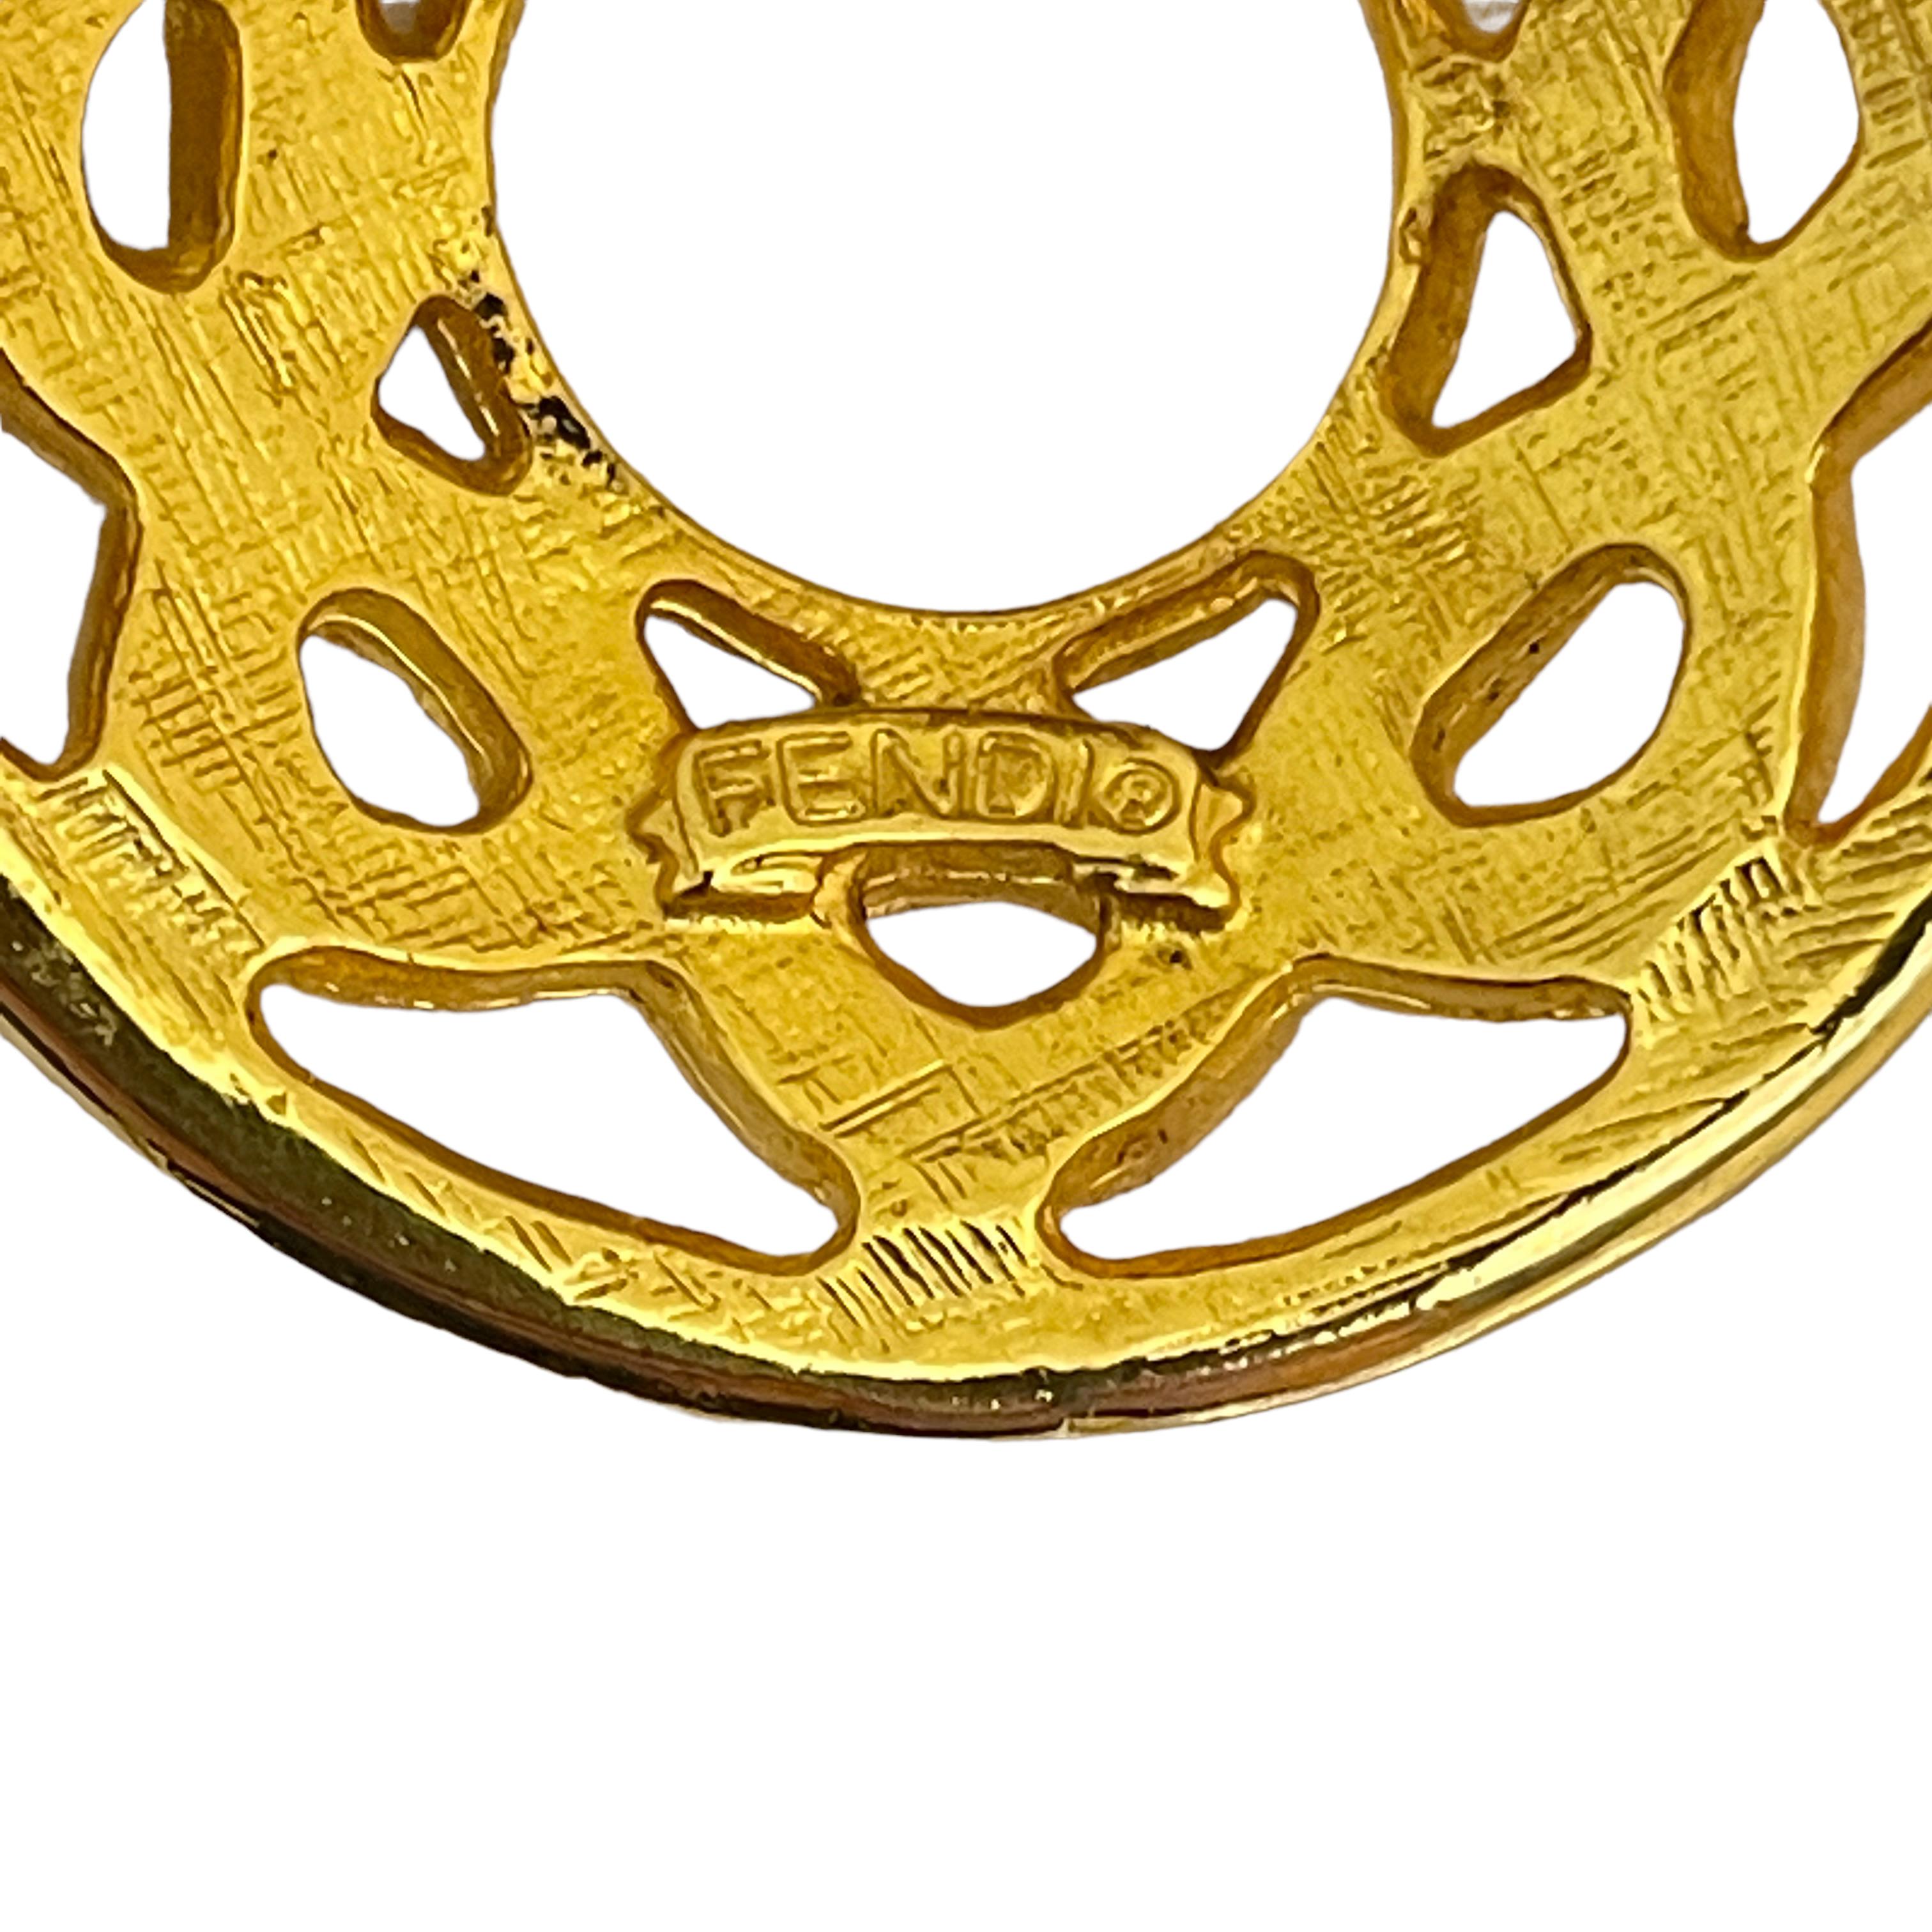 Vintage FENDI logo signed gold designer runway door knocker earrings  In Good Condition For Sale In Palos Hills, IL